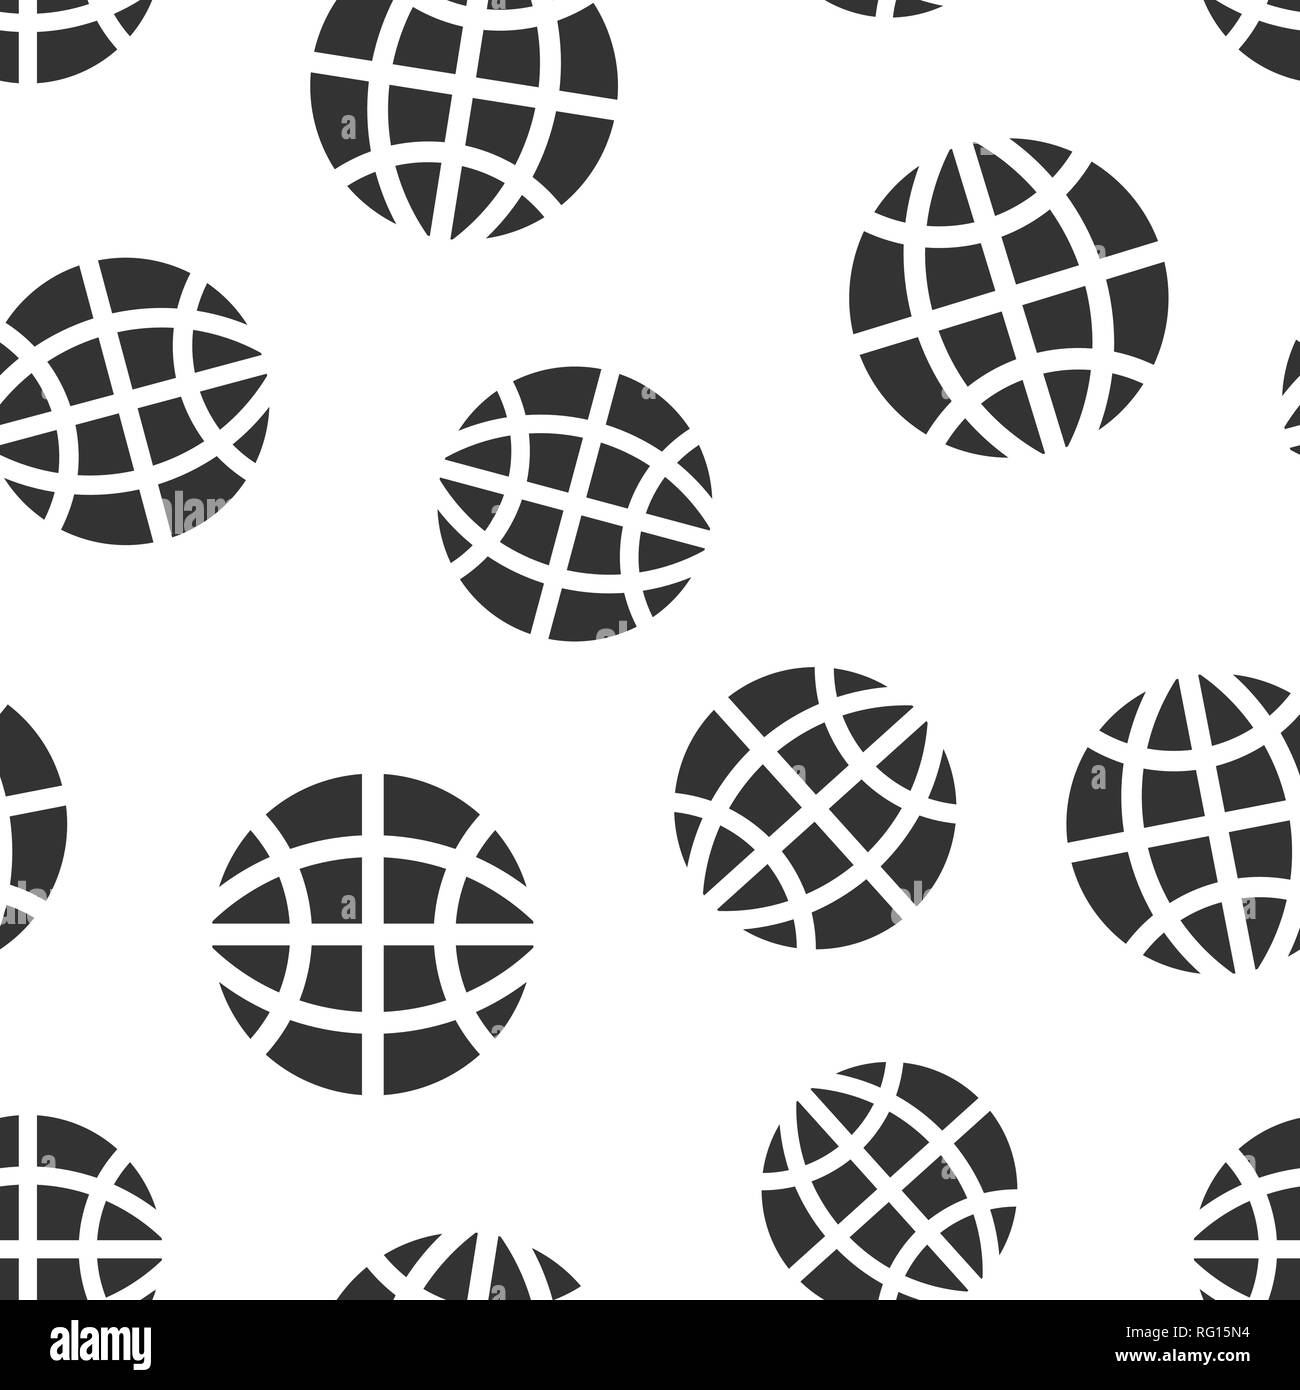 Erde - Planet Symbol nahtlose Muster Hintergrund. Globus geographische Vector Illustration. Die globale Kommunikation symbol Muster. Stock Vektor